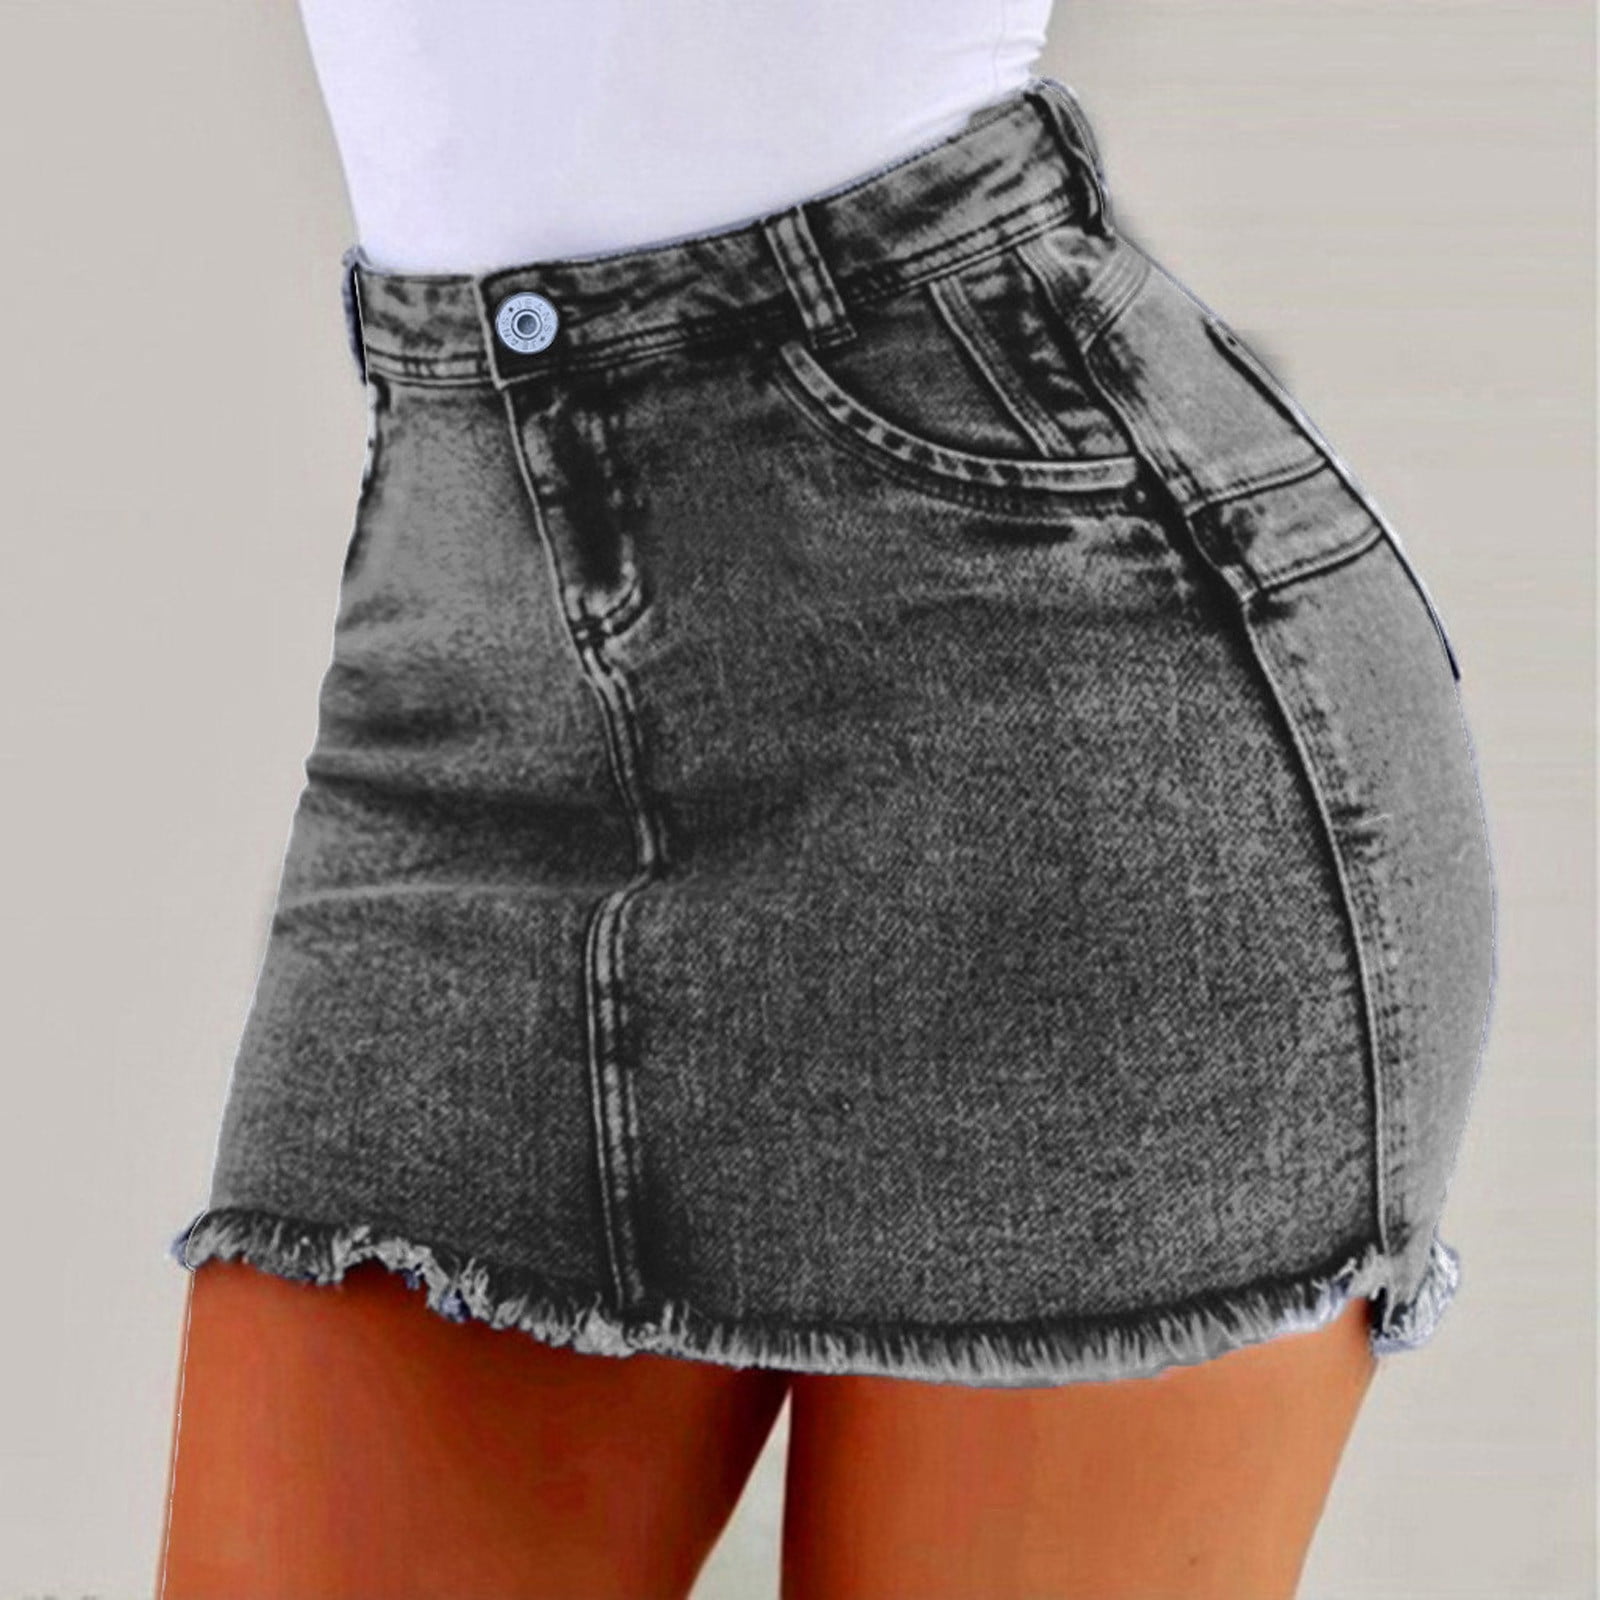 Ounabing Women Fashion Summer Short Jeans Denim Female Pockets Wash ...